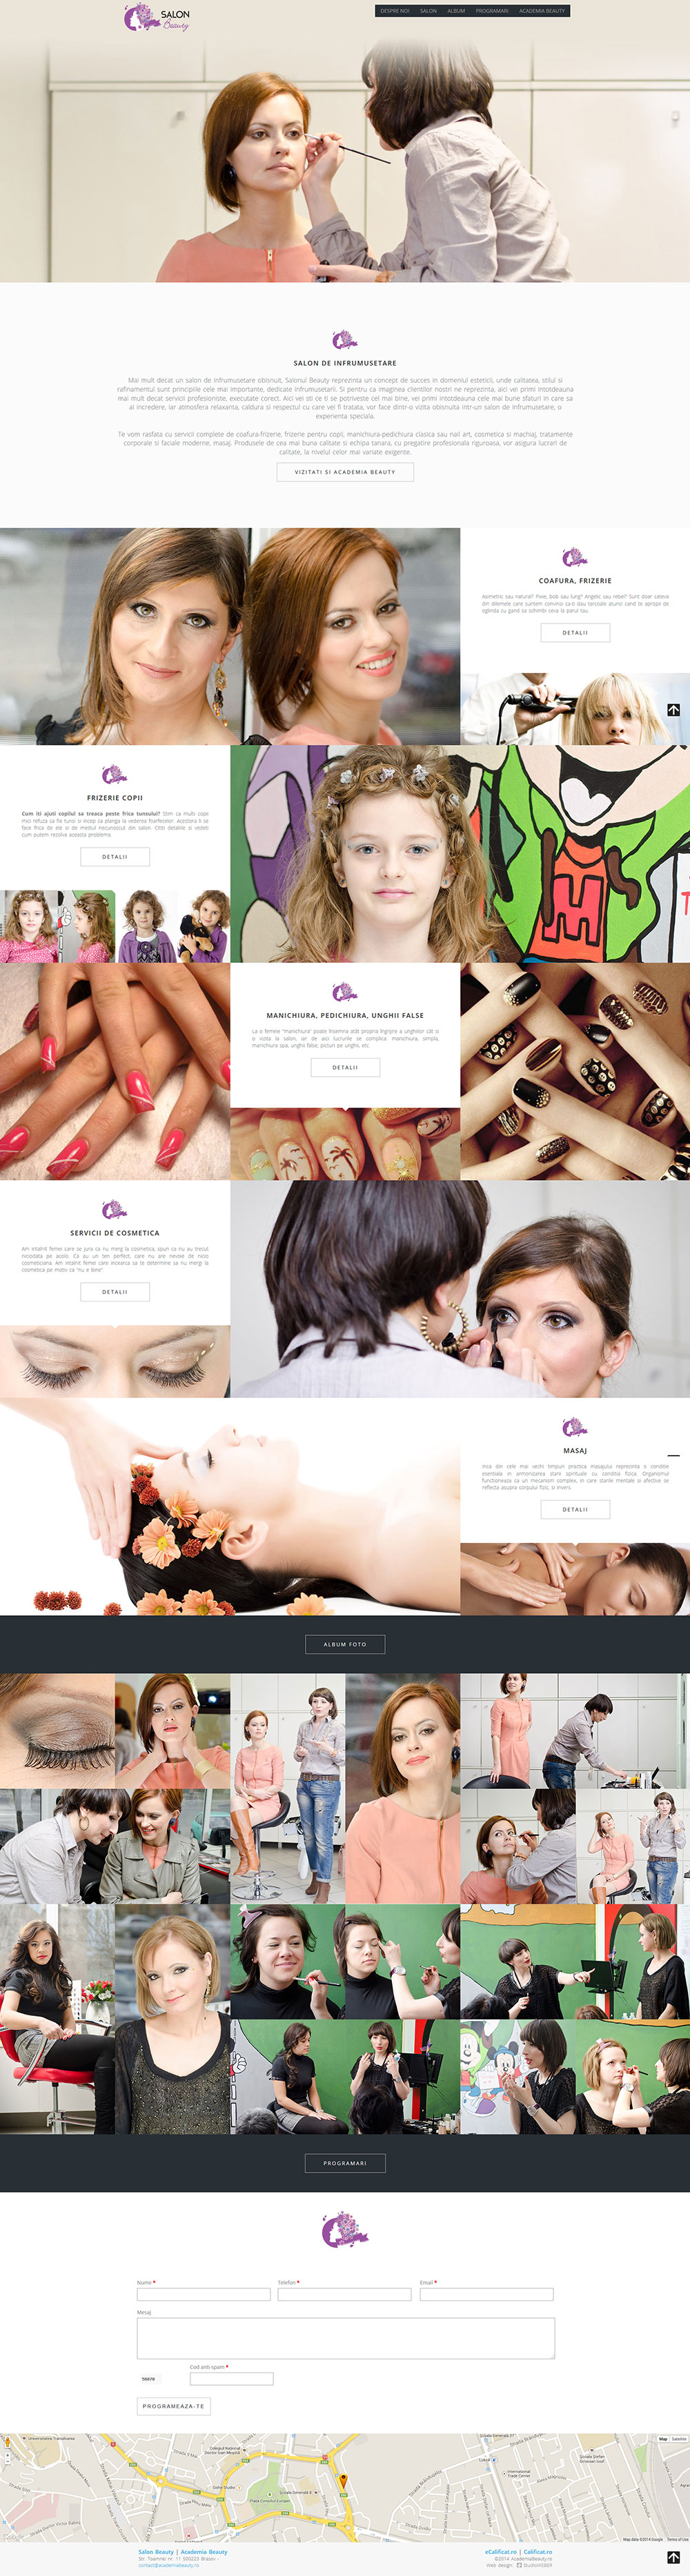 Beauty salon - presentation website